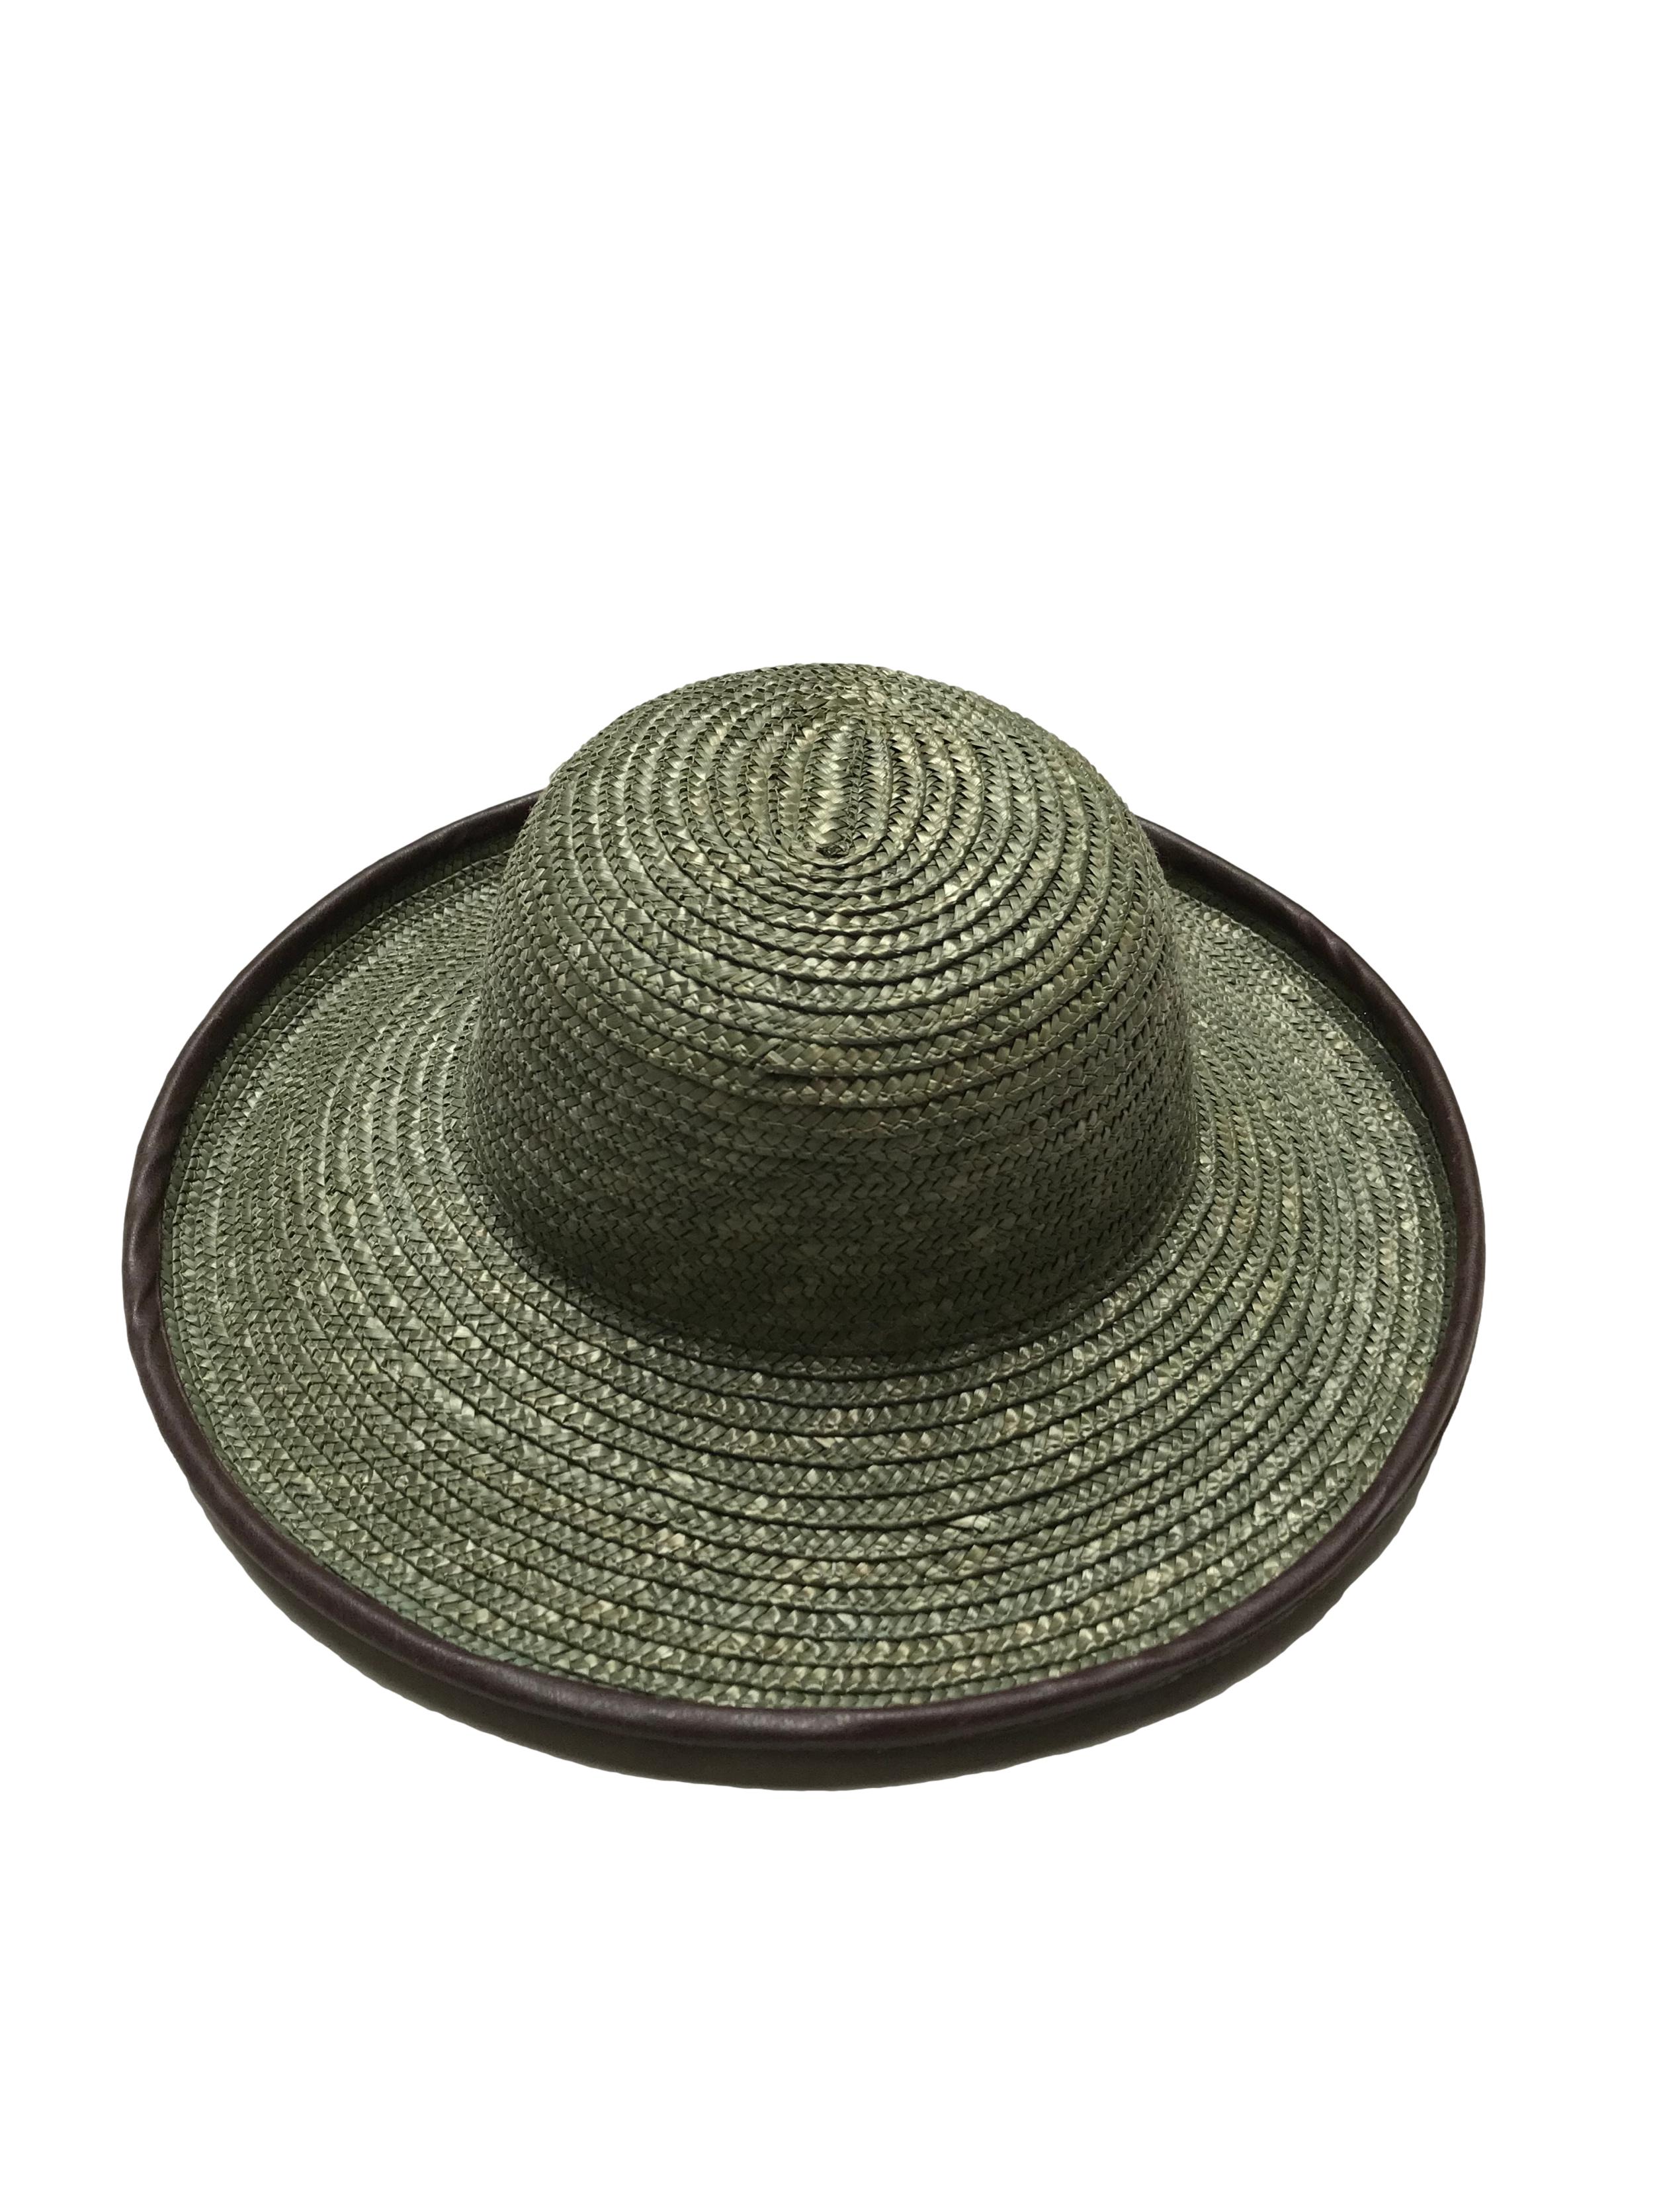 Sombrero de paja verde con ribete de cuerina marrón. Diámetro total 37cm Circunferencia cabeza 55cm